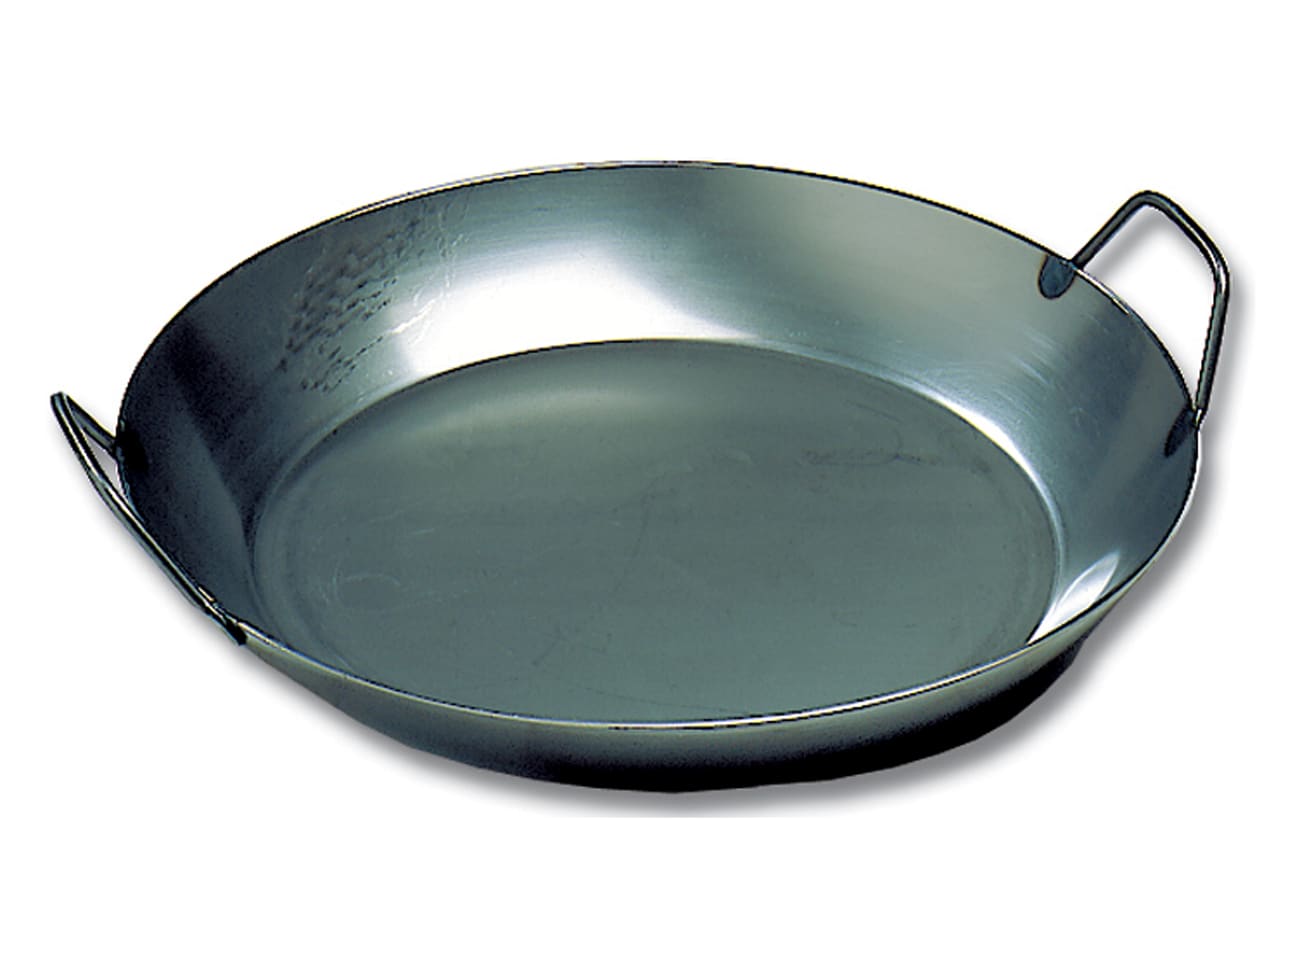 Paella pan in blue steel Ø 36cm Matfer Meilleur du Chef